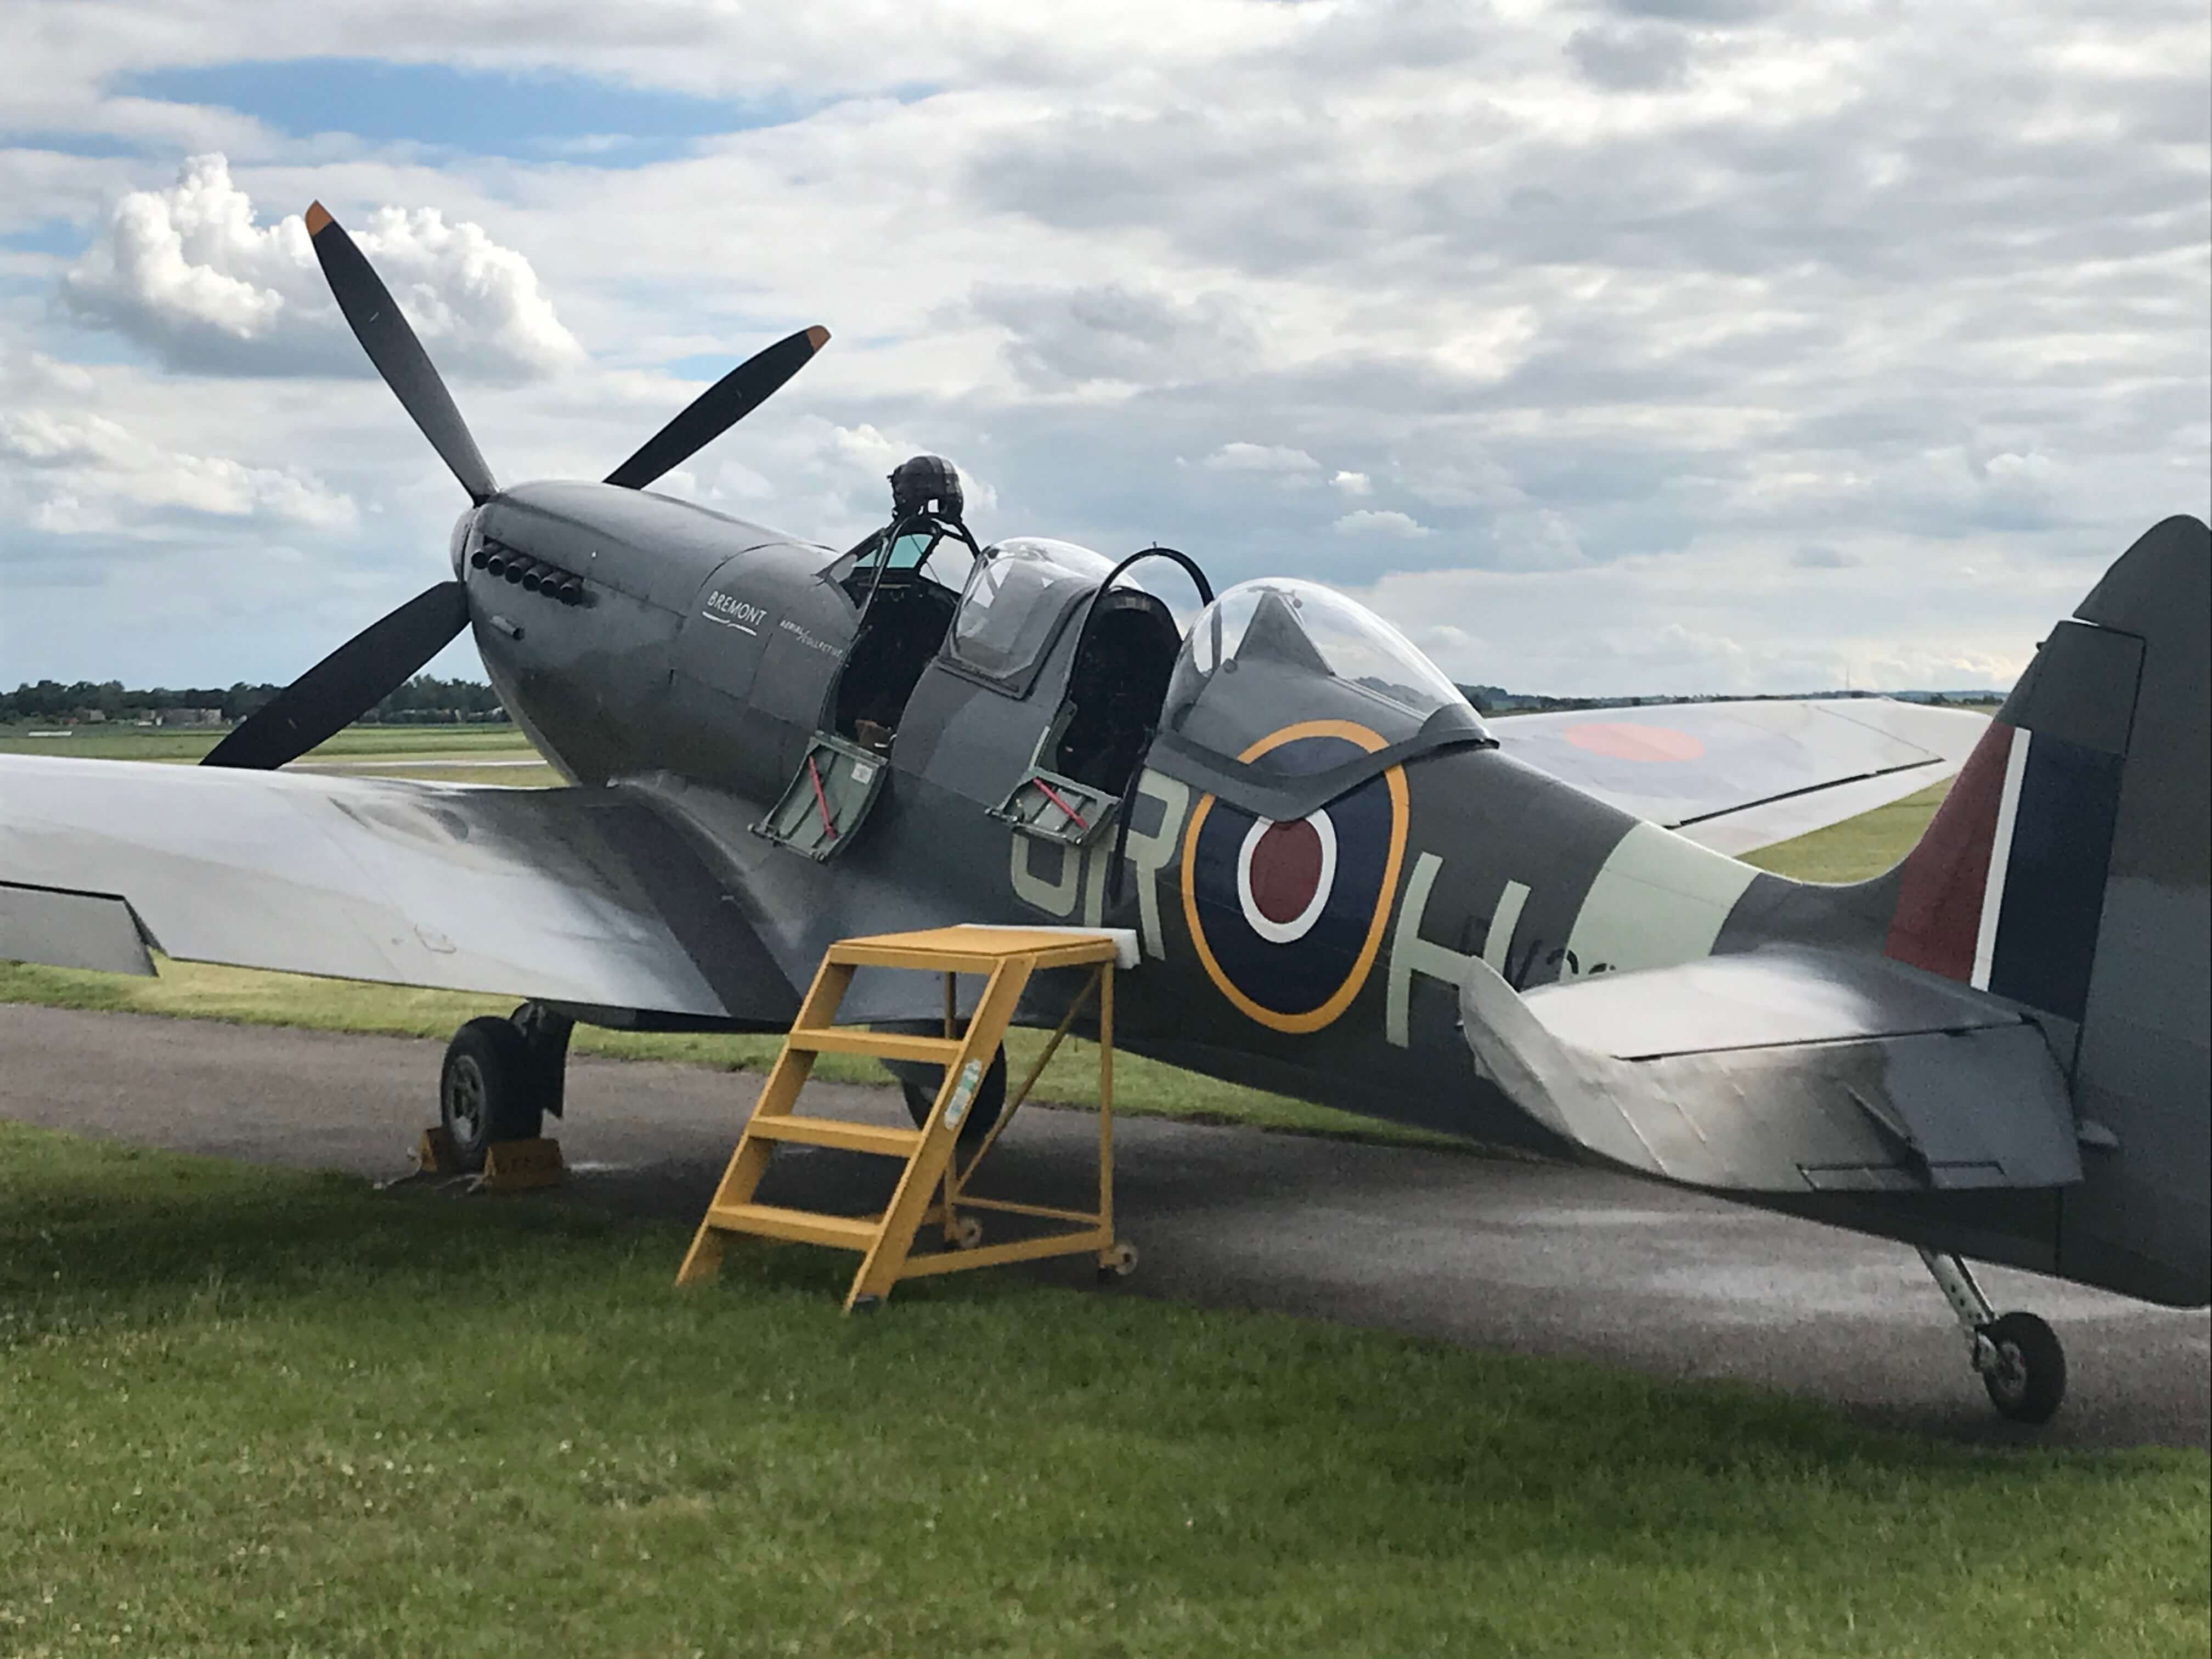 The Spitfire awaits